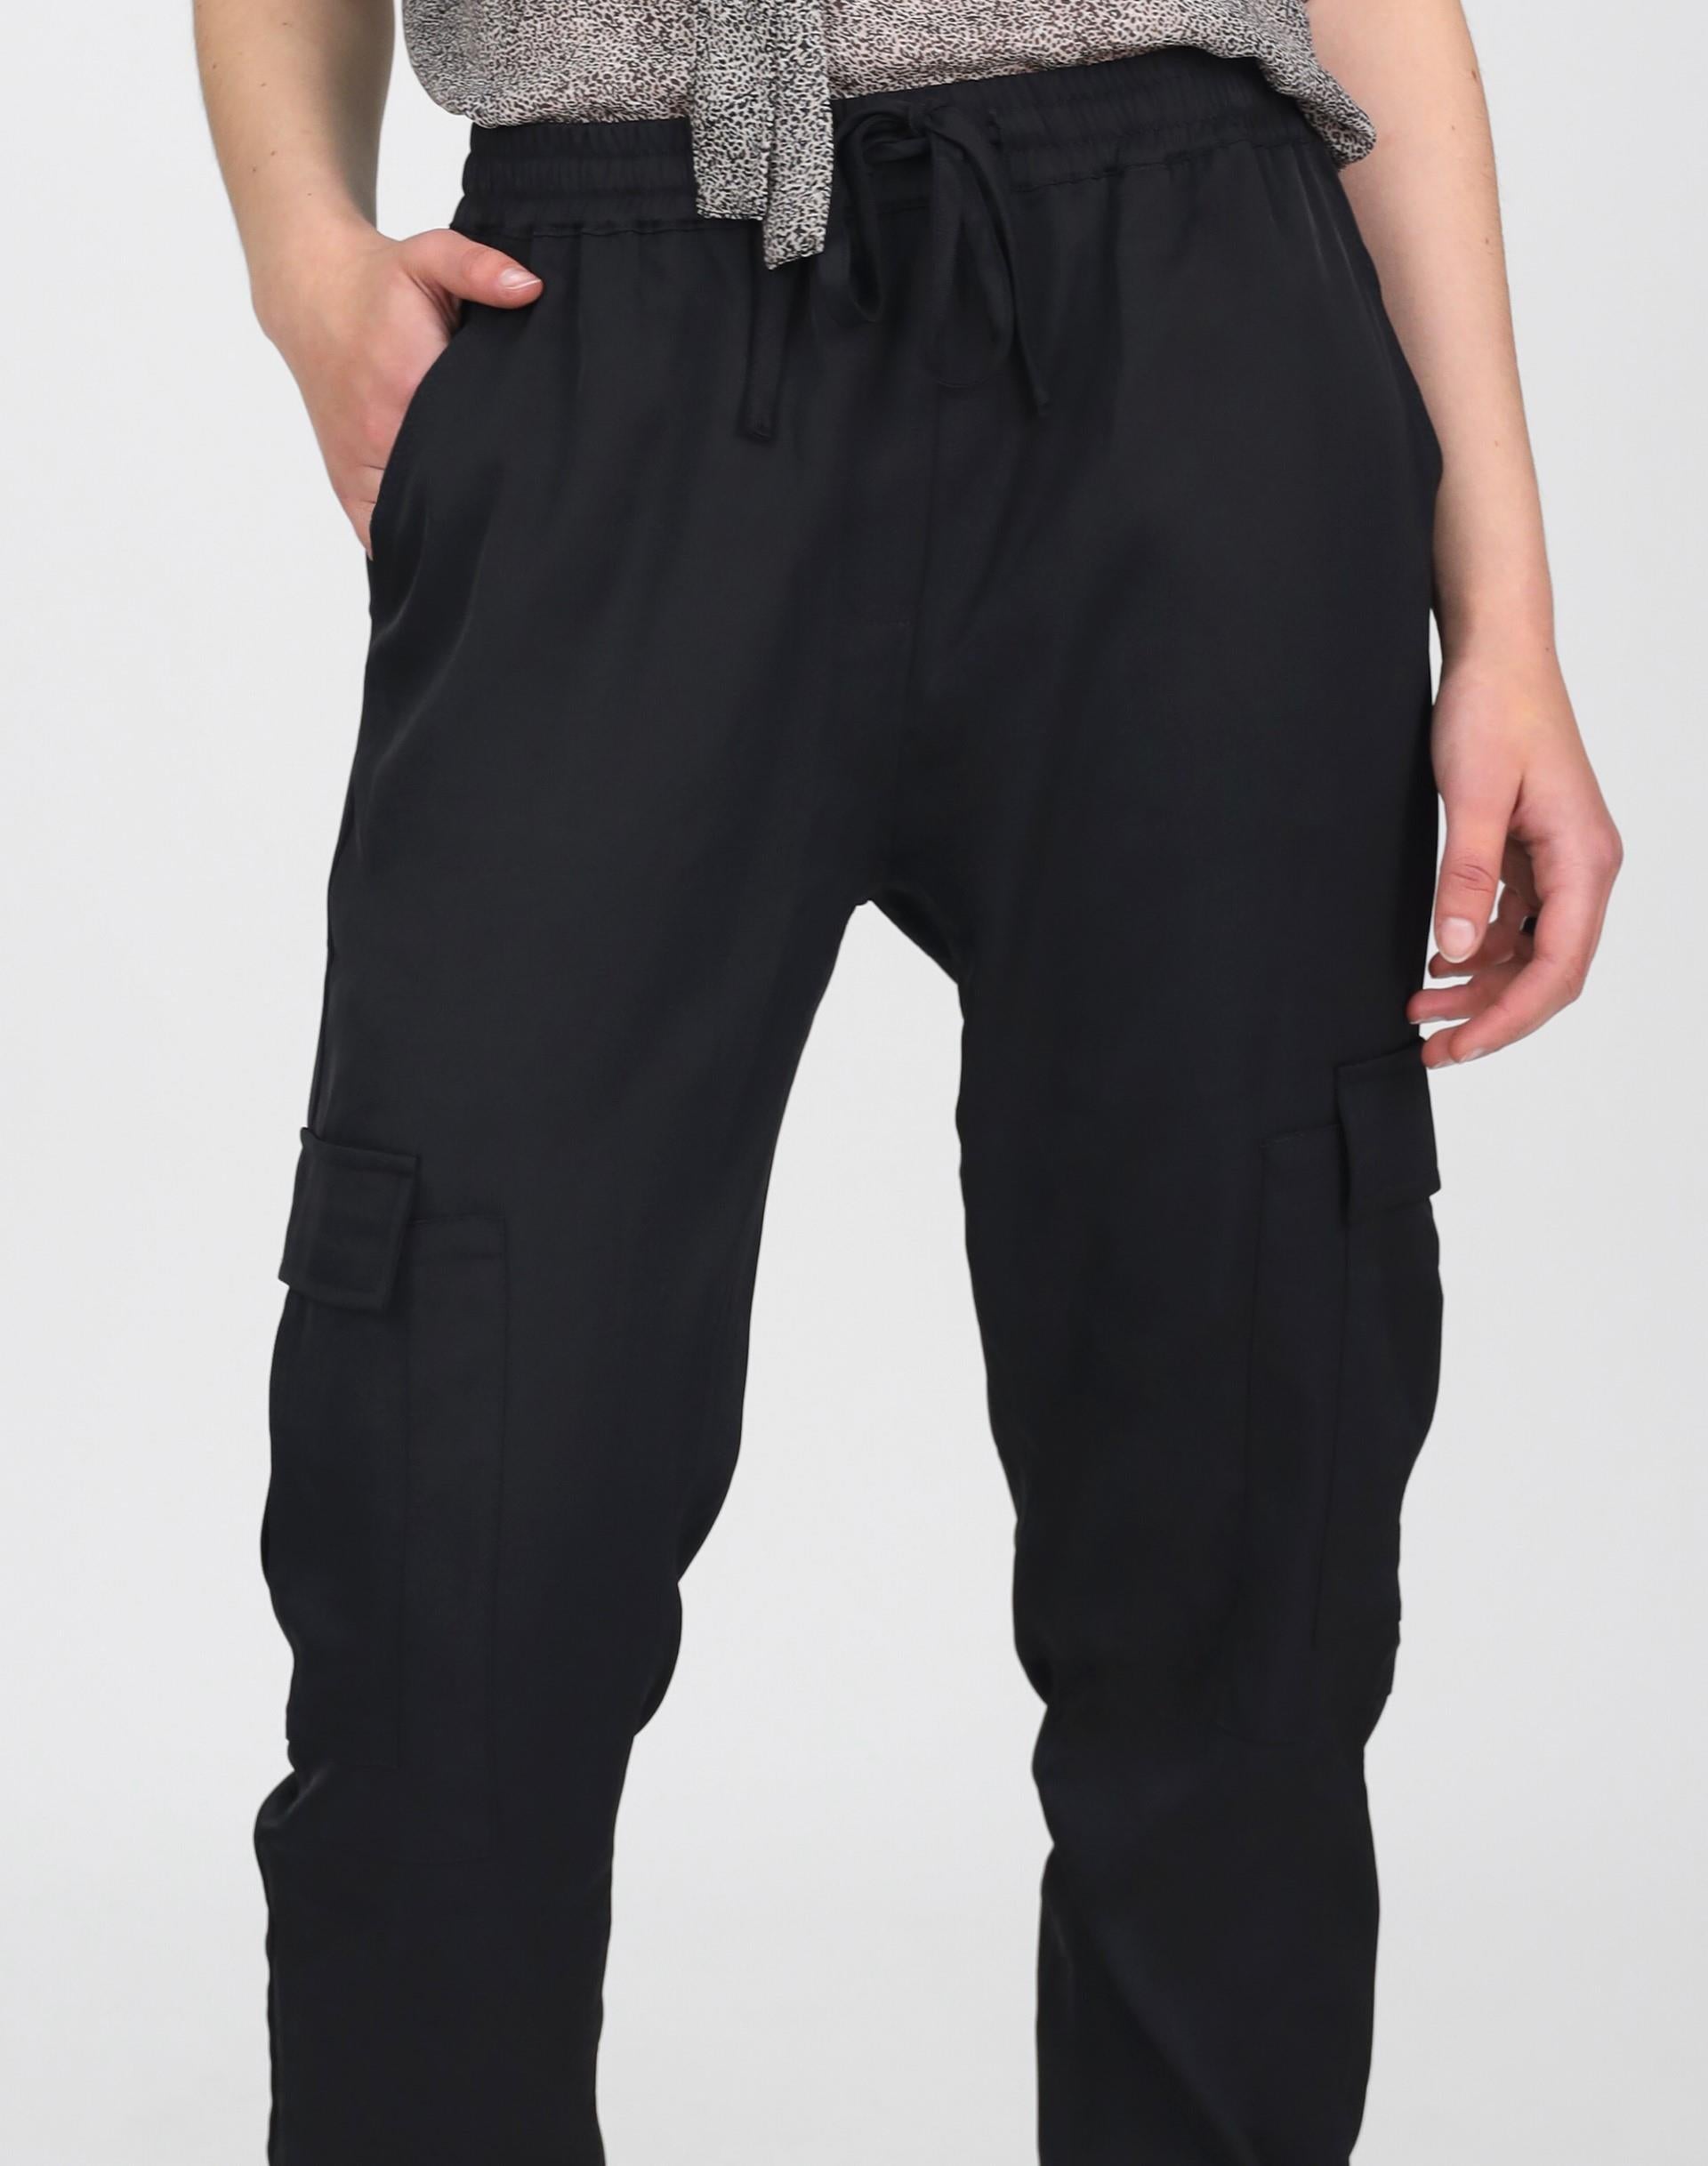 Twill Cargo Pant - Black - Pants - Full Length - Women's Clothing - Storm